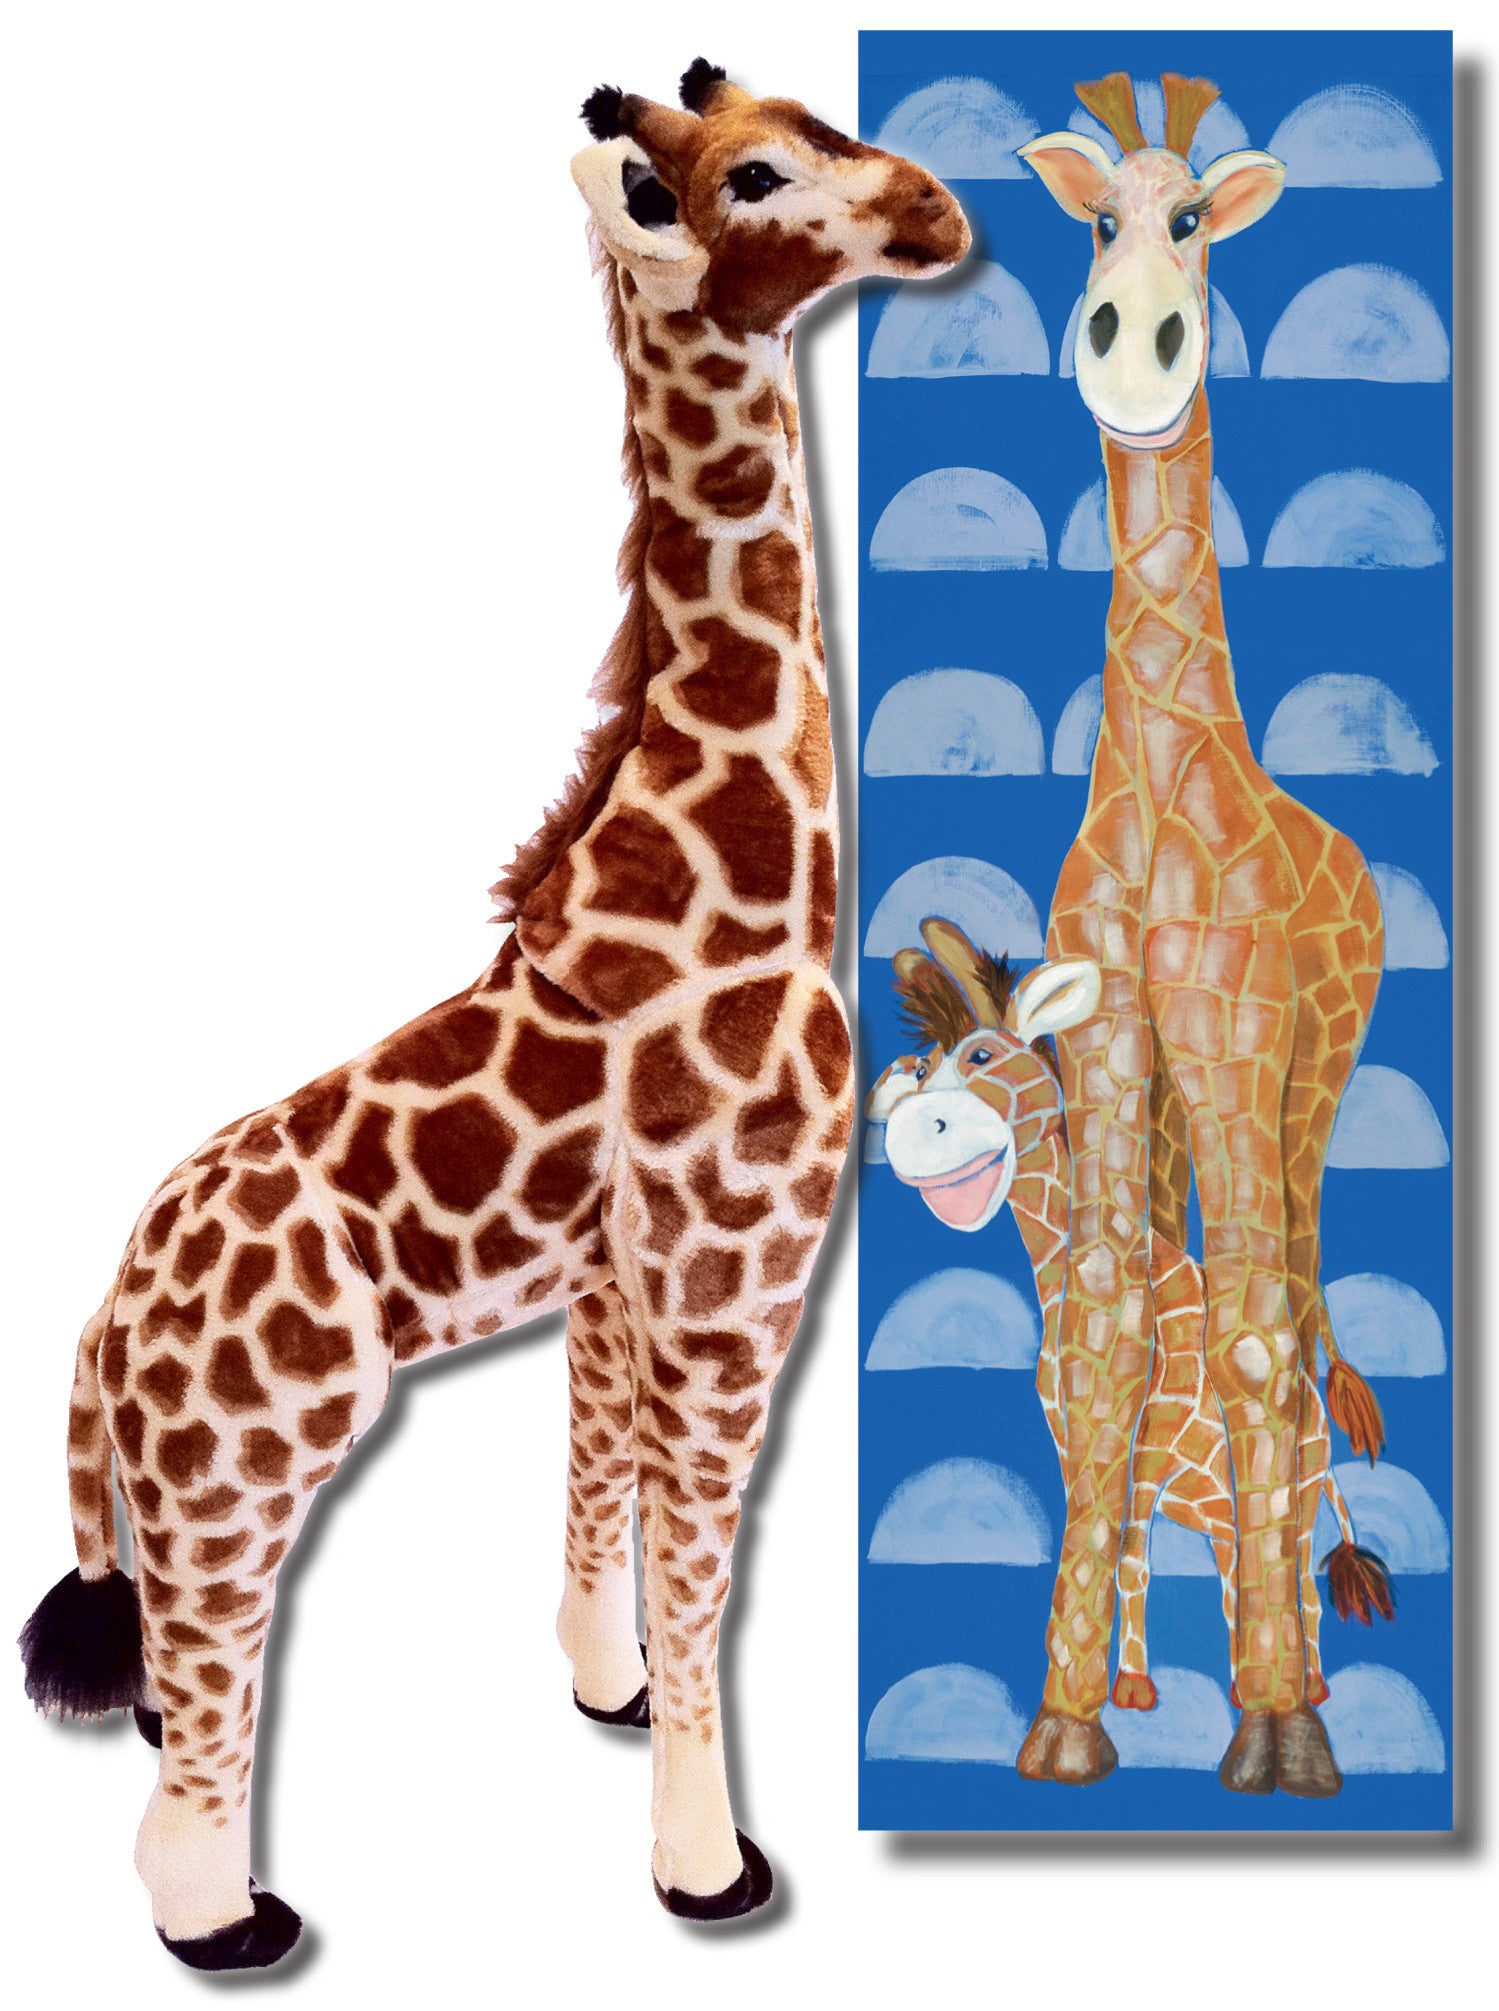 Baby Giraffe Stuffed Animal- Melissa and Doug